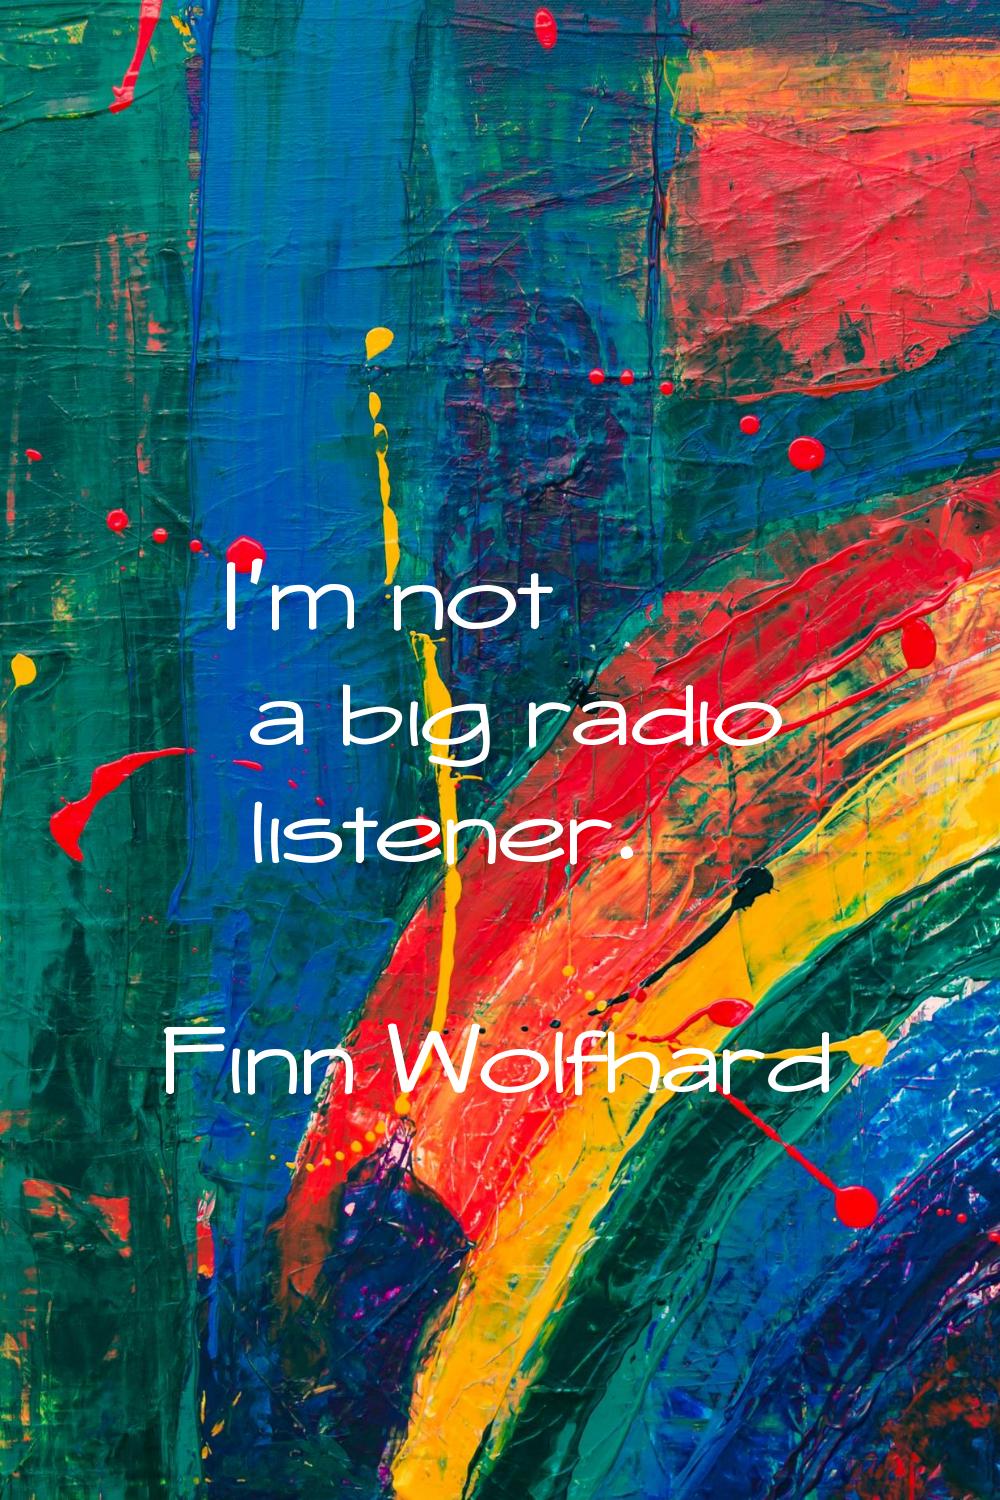 I'm not a big radio listener.